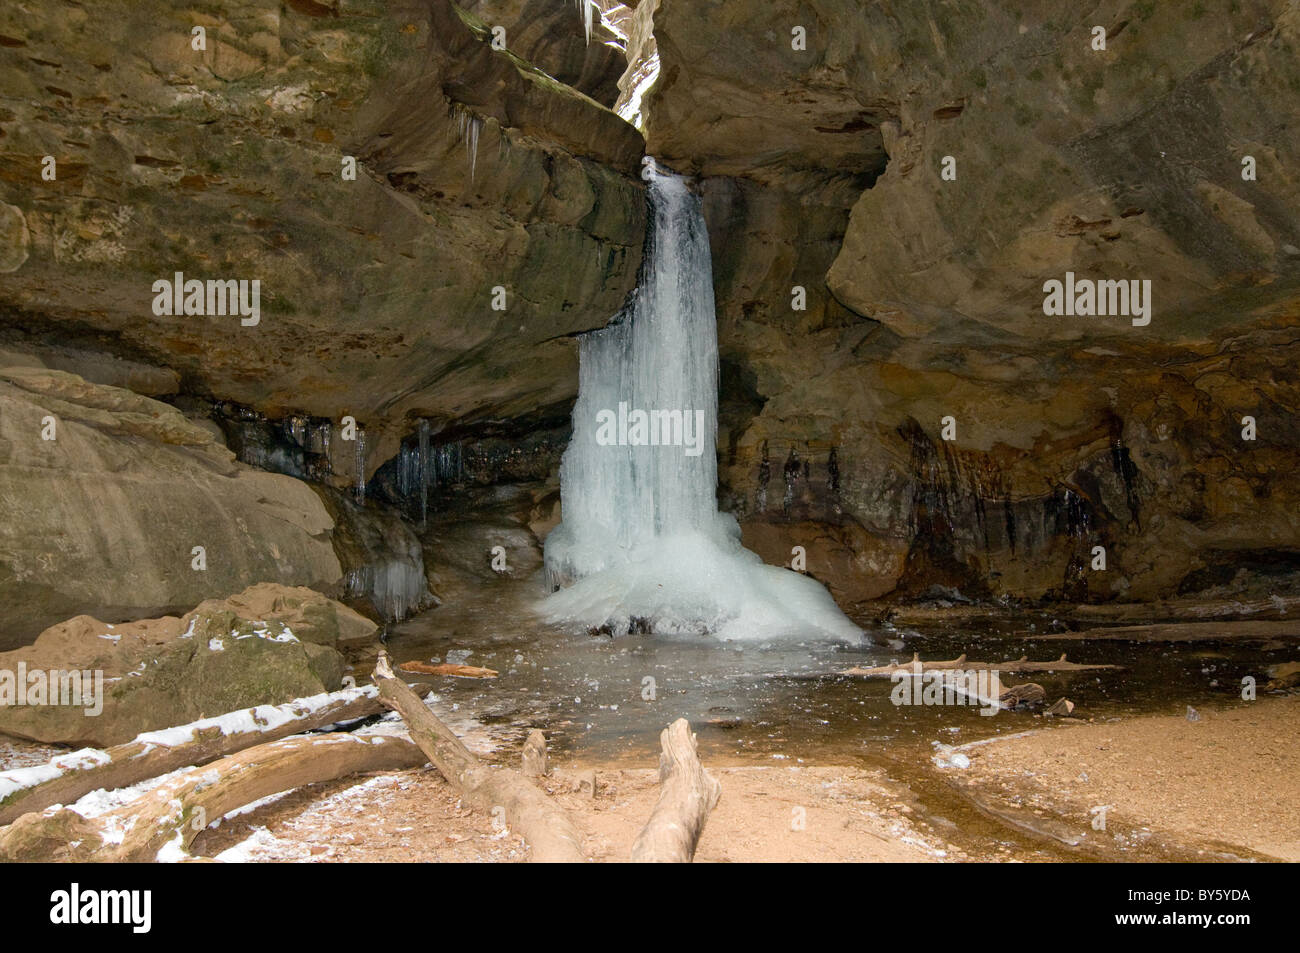 Las cascadas congeladas en Hocking Ohio State Park Foto de stock